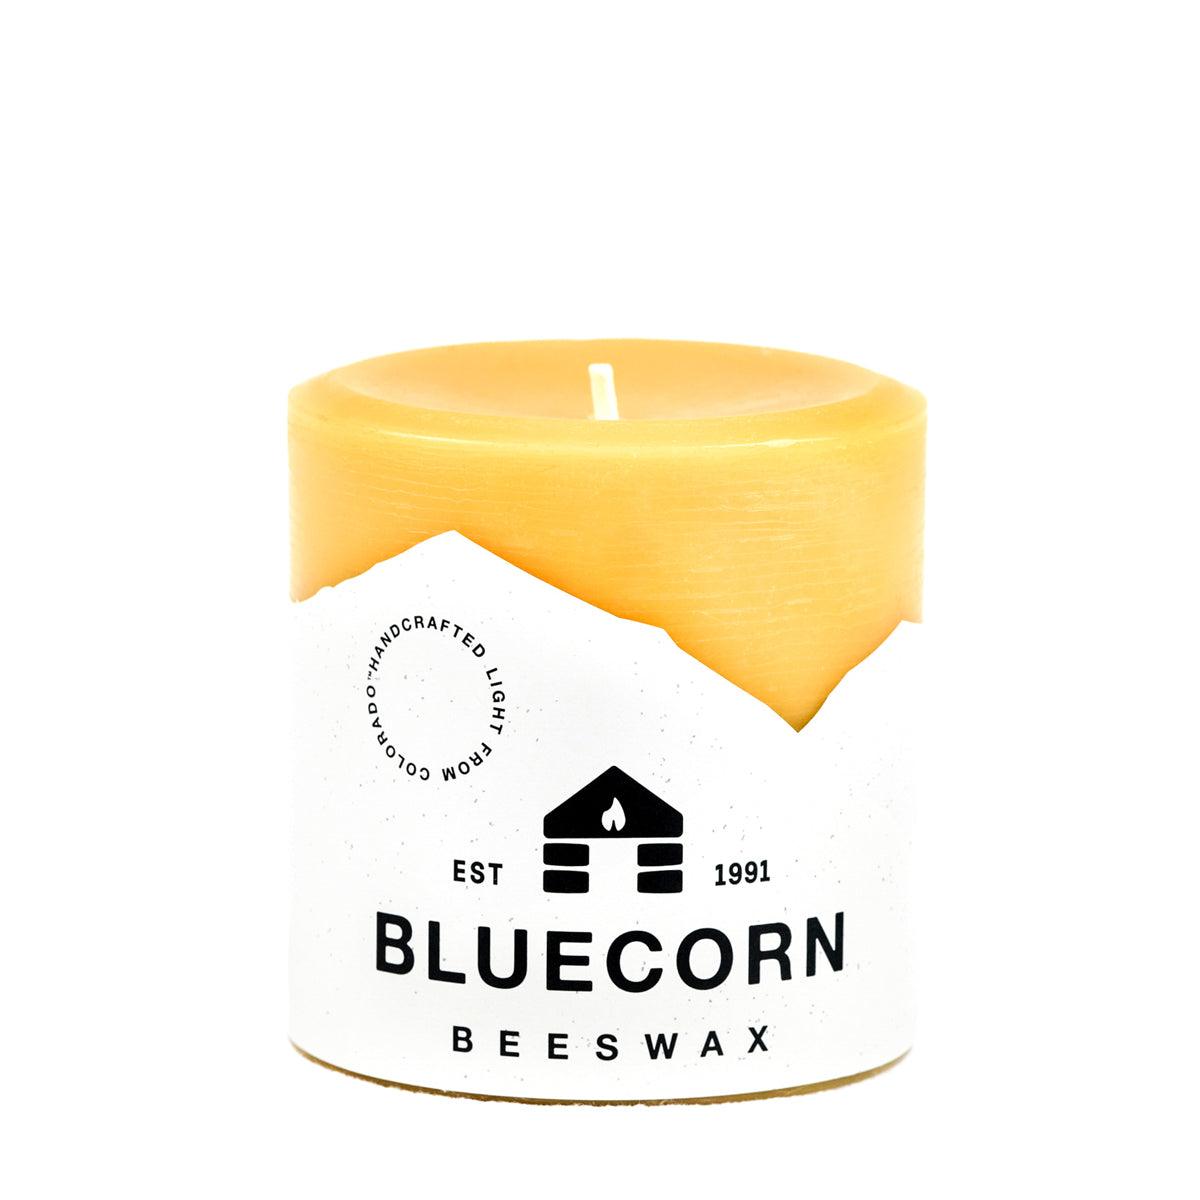 100% Pure Organic Beeswax pillar candles-Set of 3 beeswax pillar candles